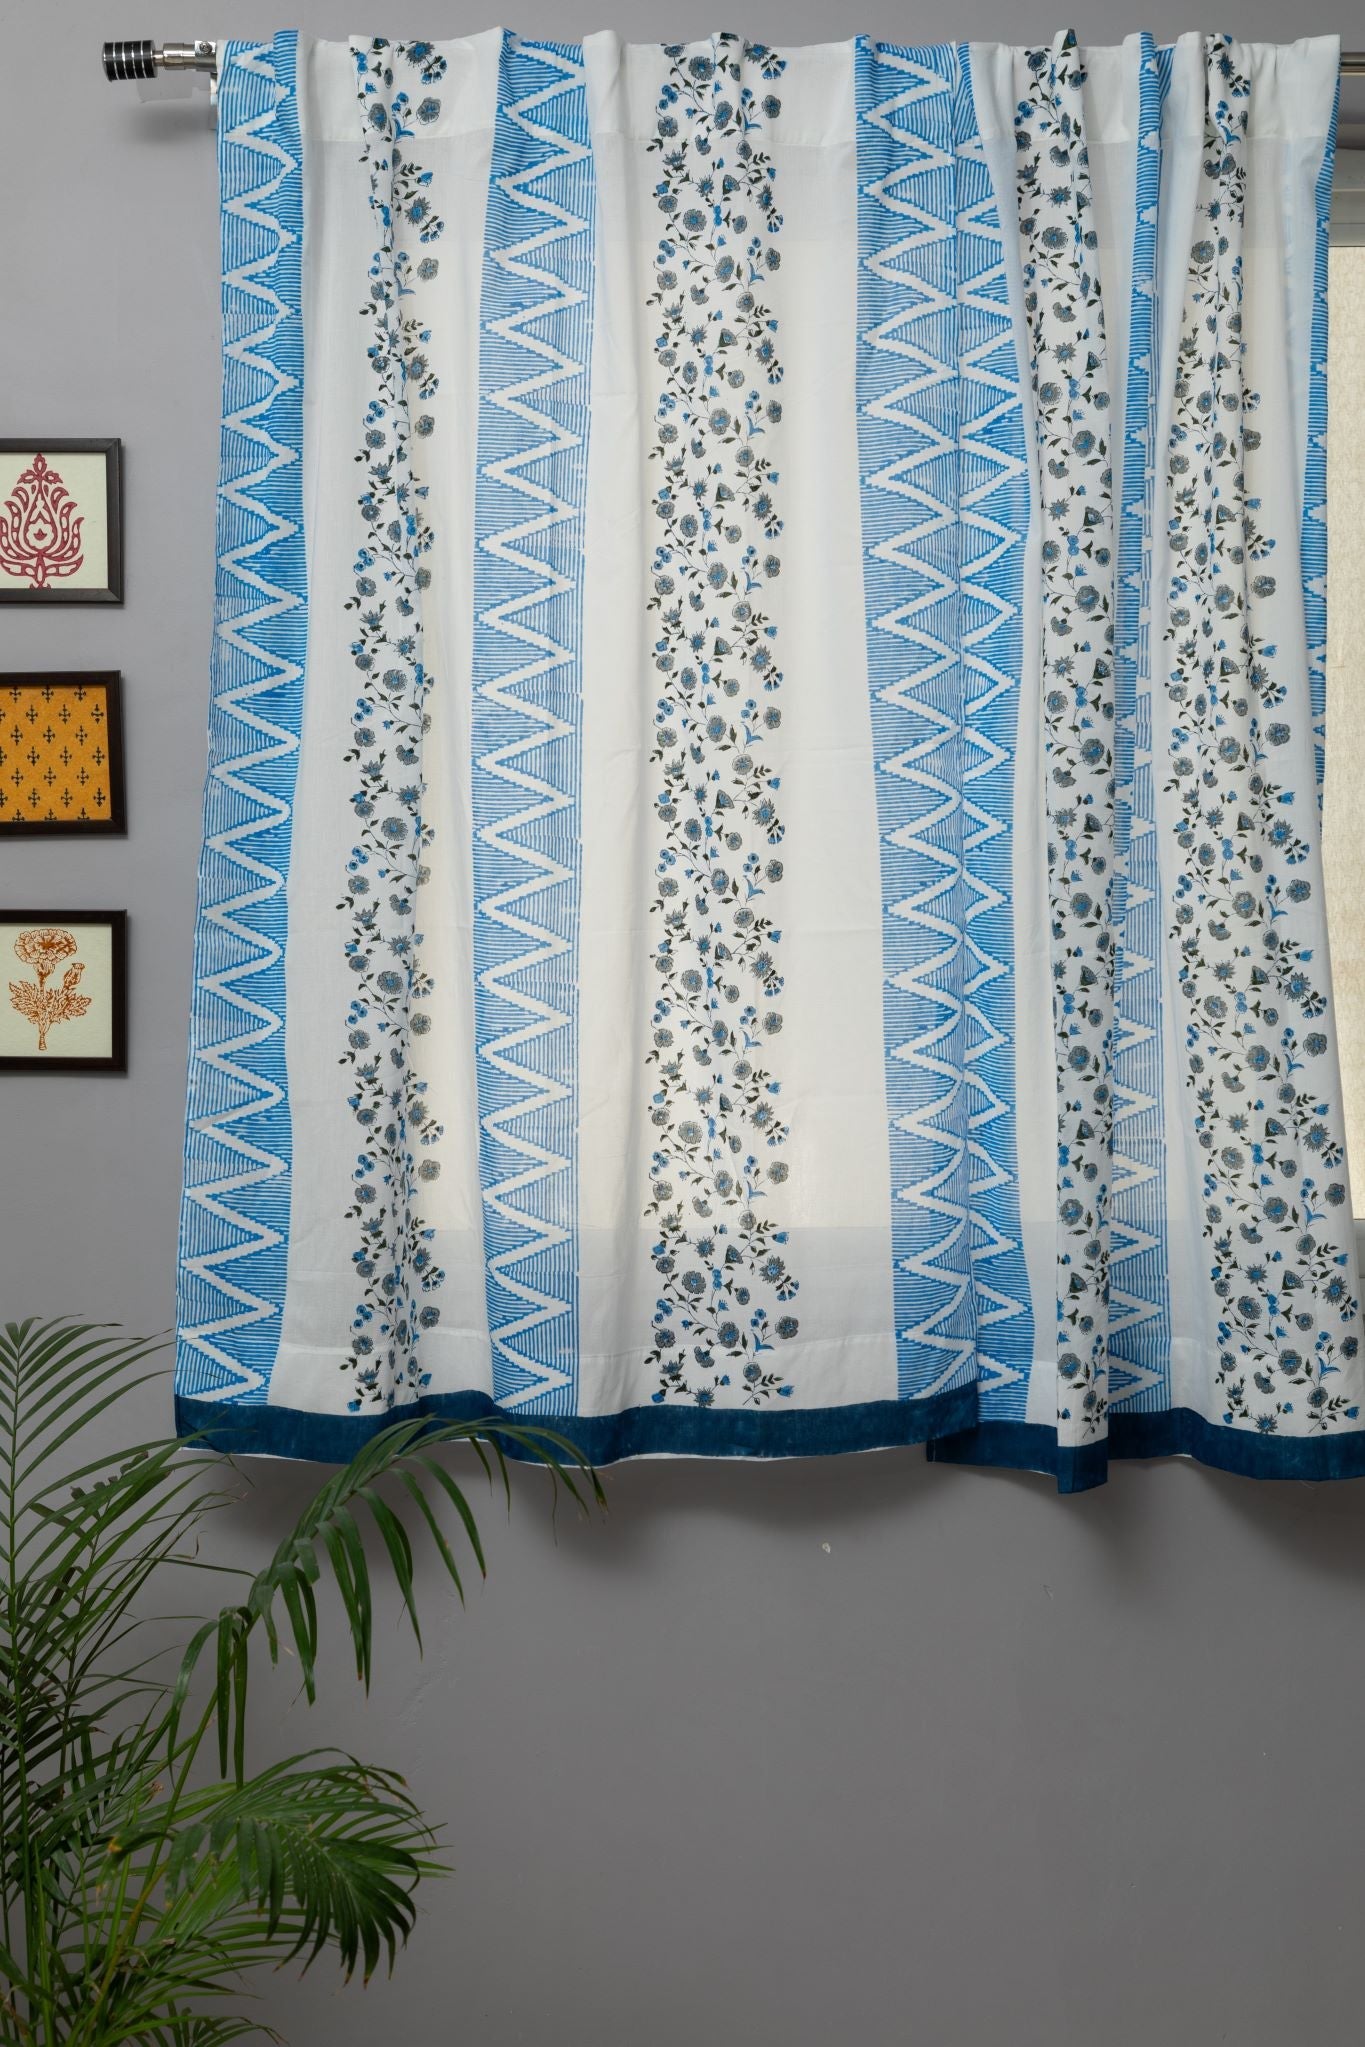 SootiSyahi 'Made on Earth' Philippine Blue' Cotton Window Curtain